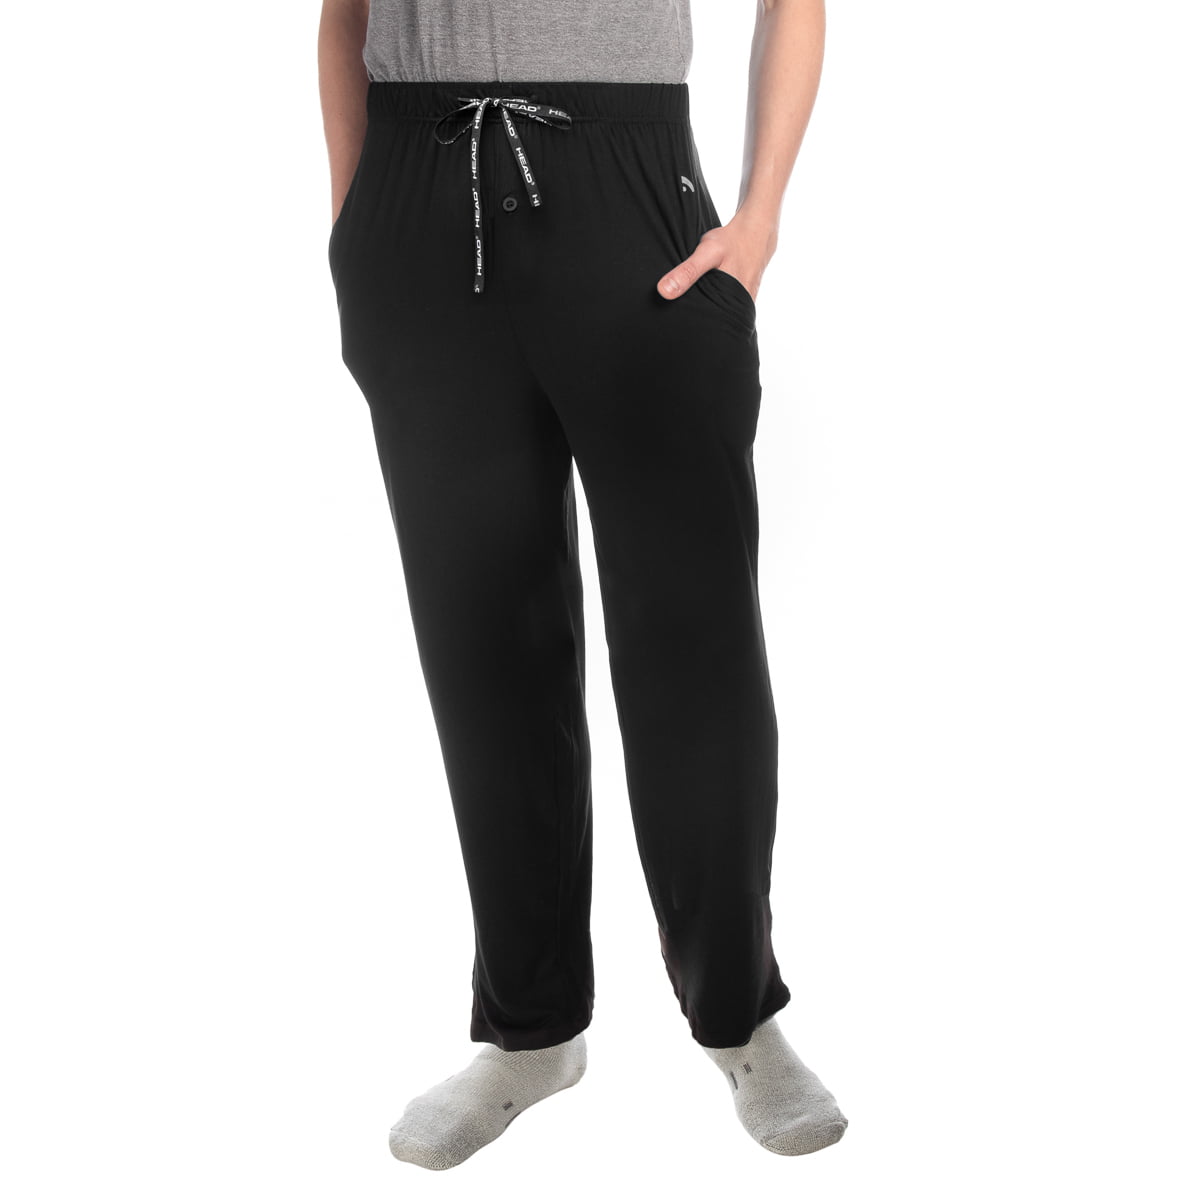 Mens Cozy Polar Fleece Pajama Pants Very Soft Touch W/2 Front Pockets PJ7012